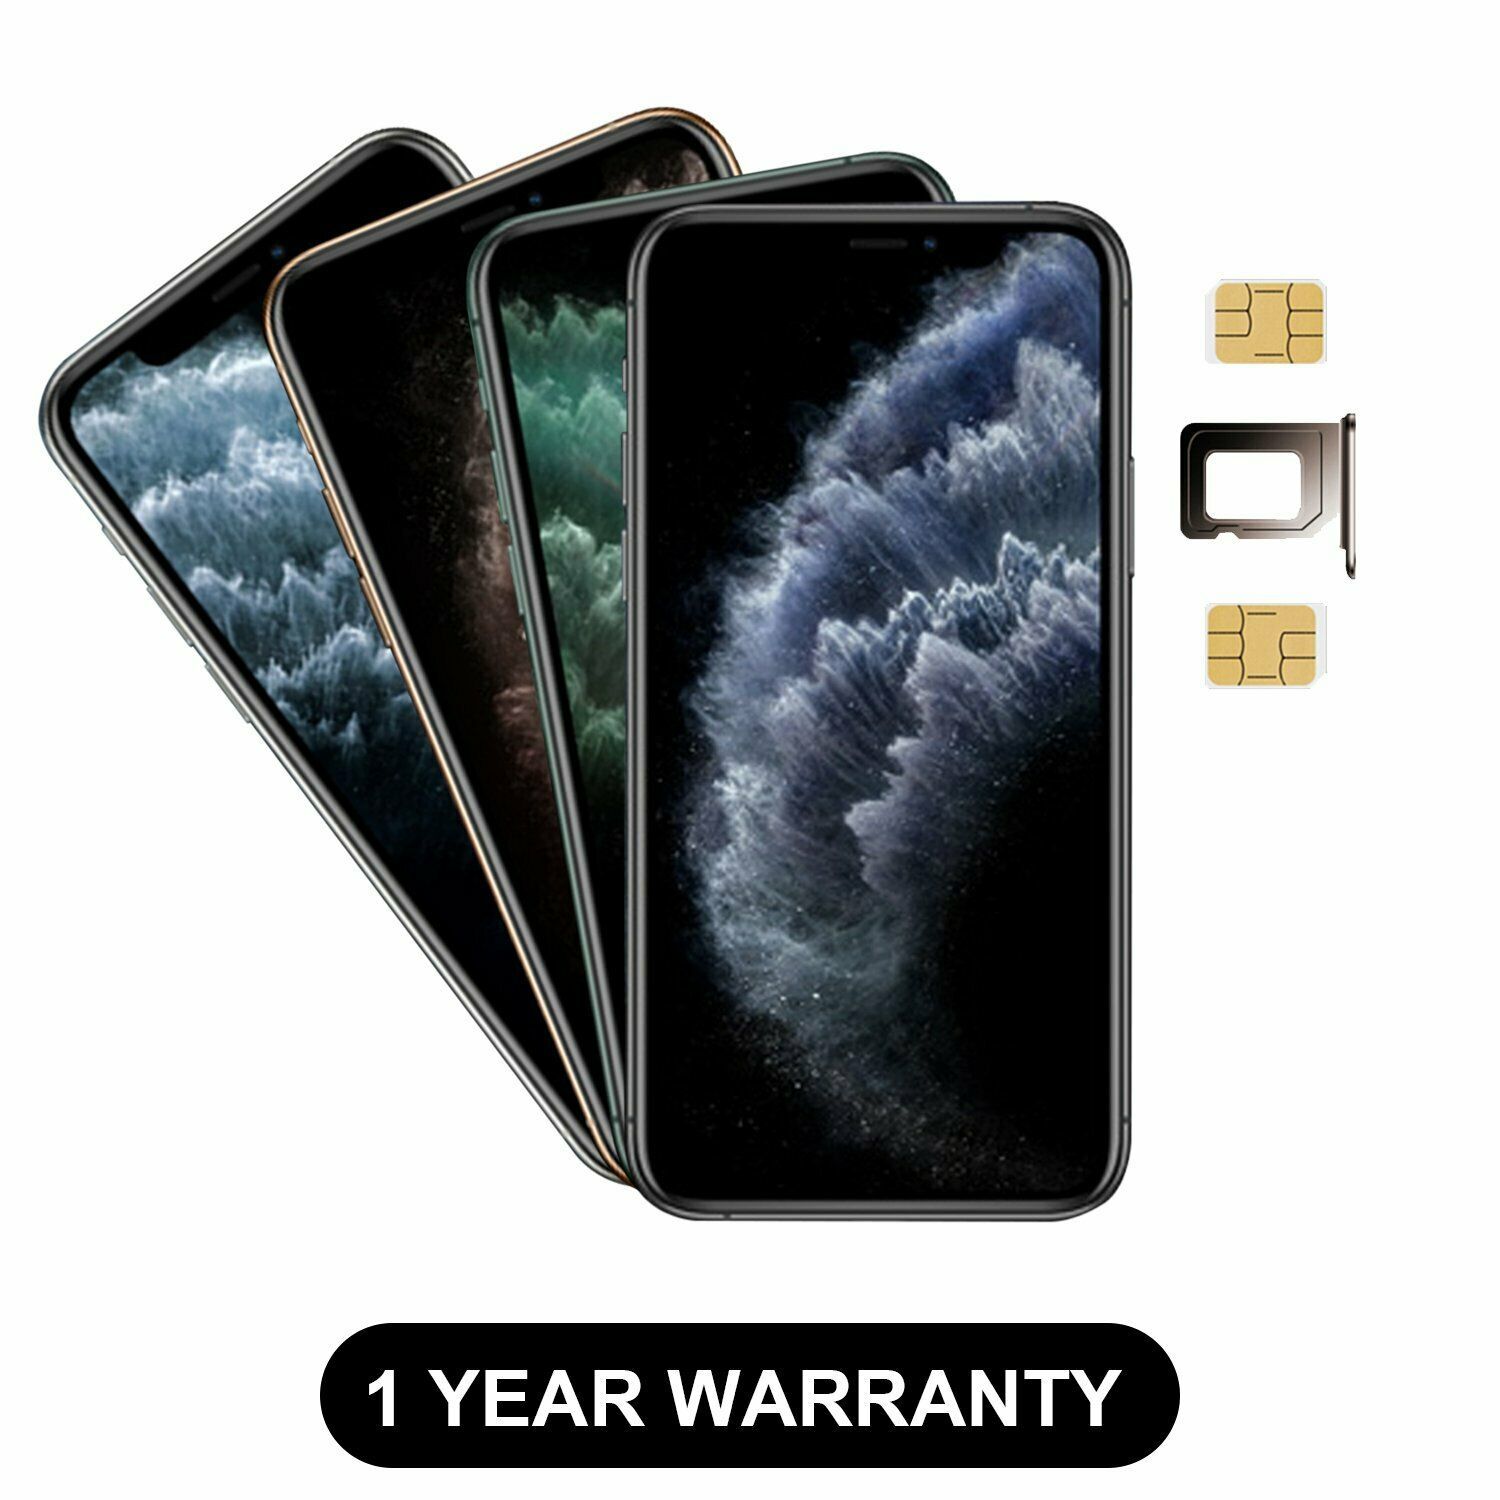 APPLE iPhone 11 Pro NEW 256GB/512GB Dual SIM Unlocked 1year Warranty